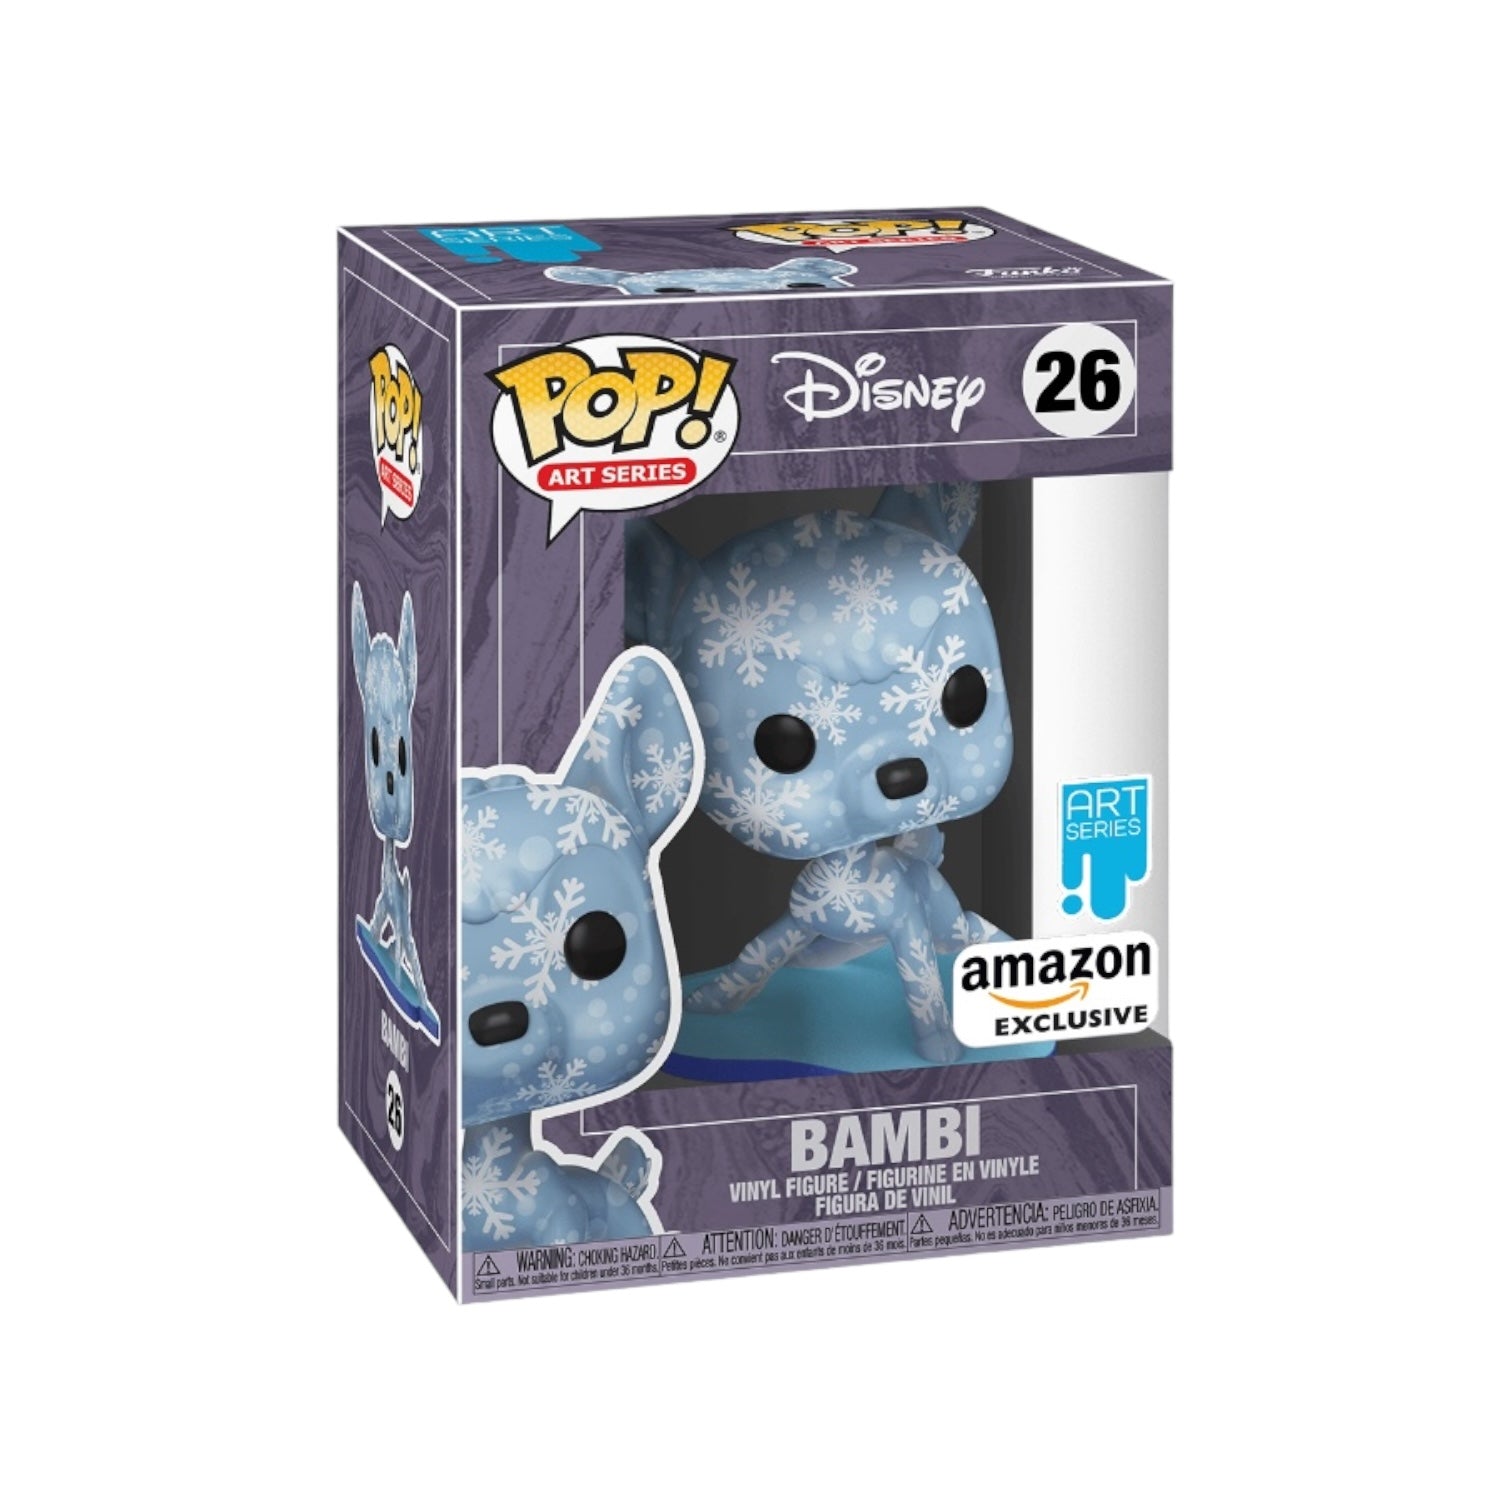 Bambi #26 Art Series Funko Pop! - Disney - Amazon Exclusive